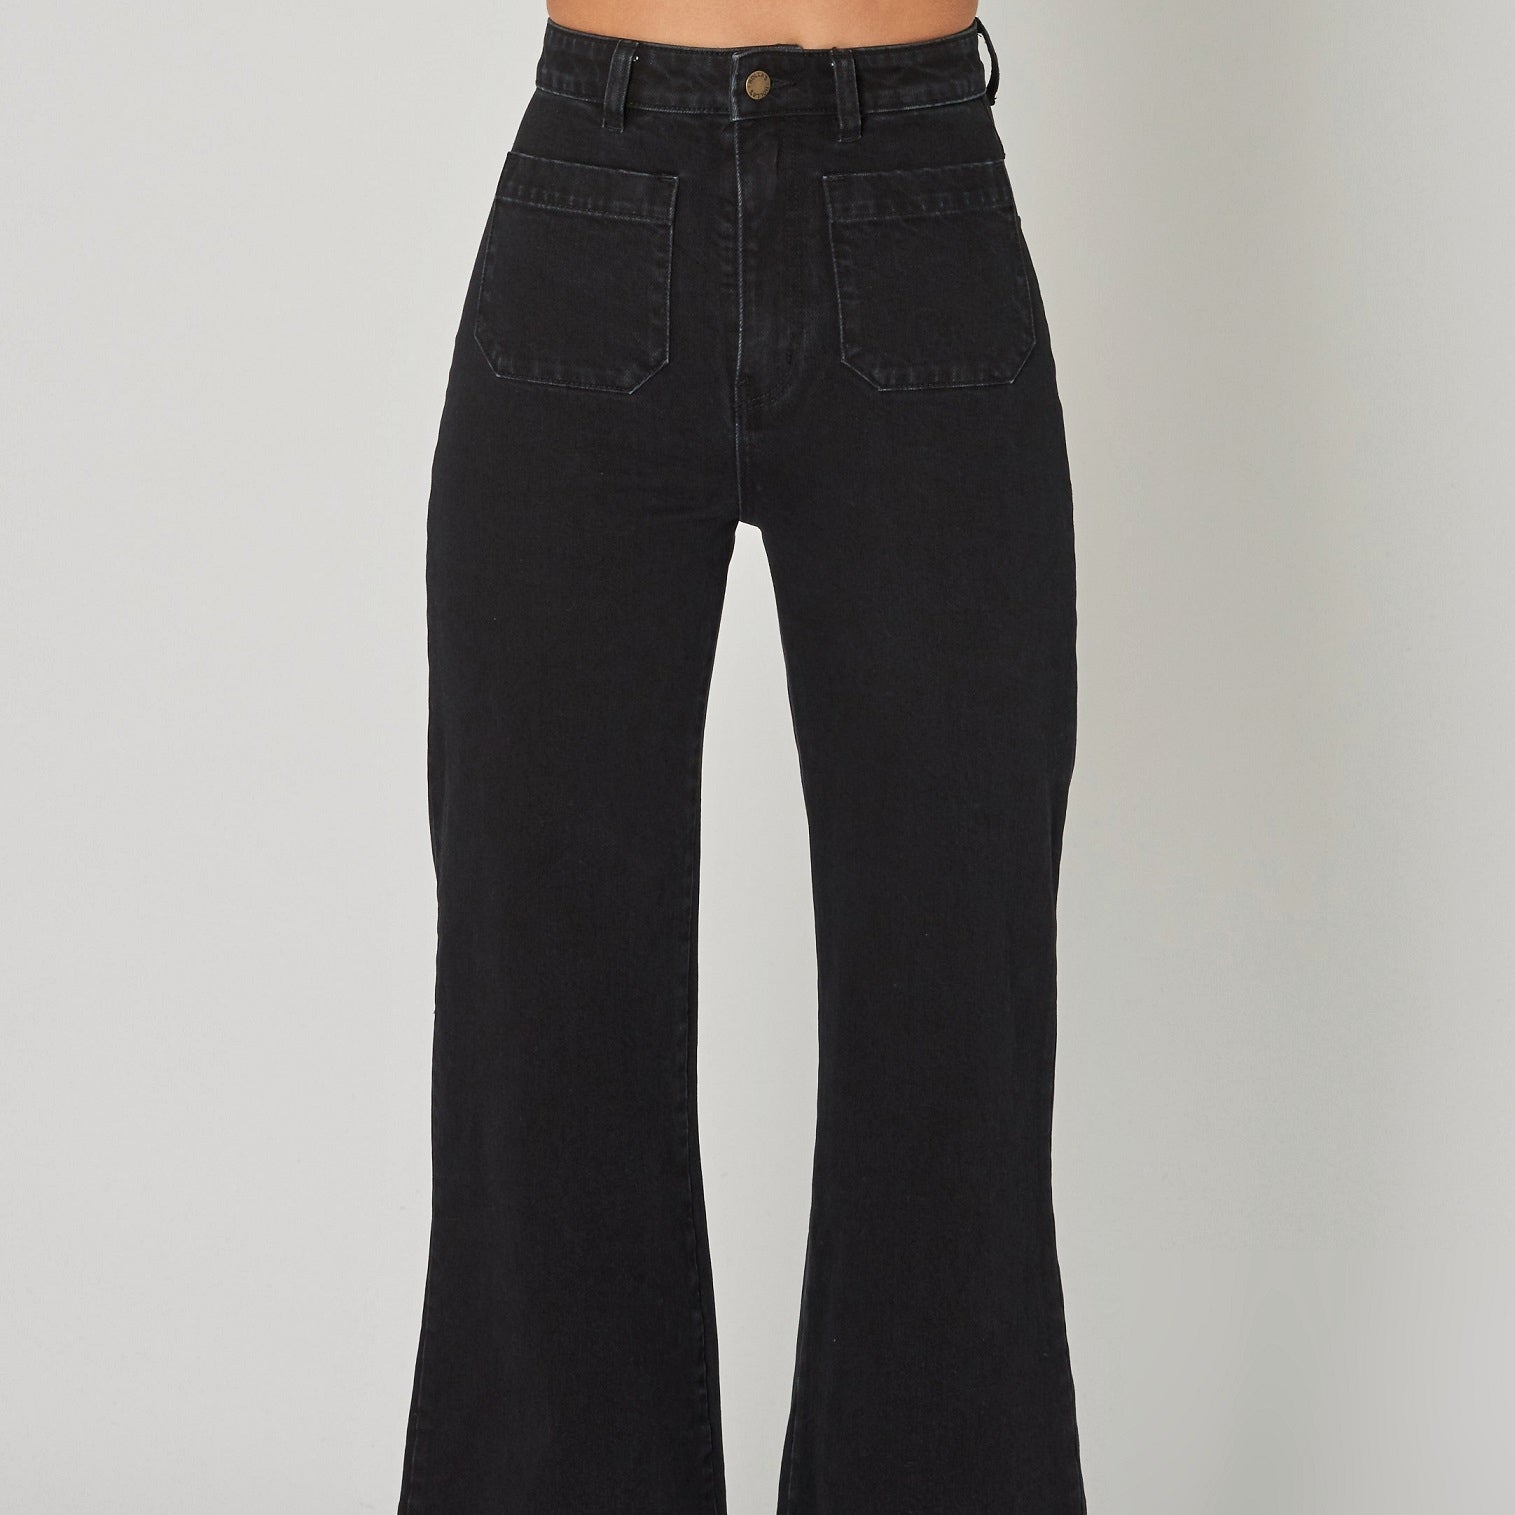 Girls Comfort Stretchy Bell Bottom Flared Jet Black Denim Jeans